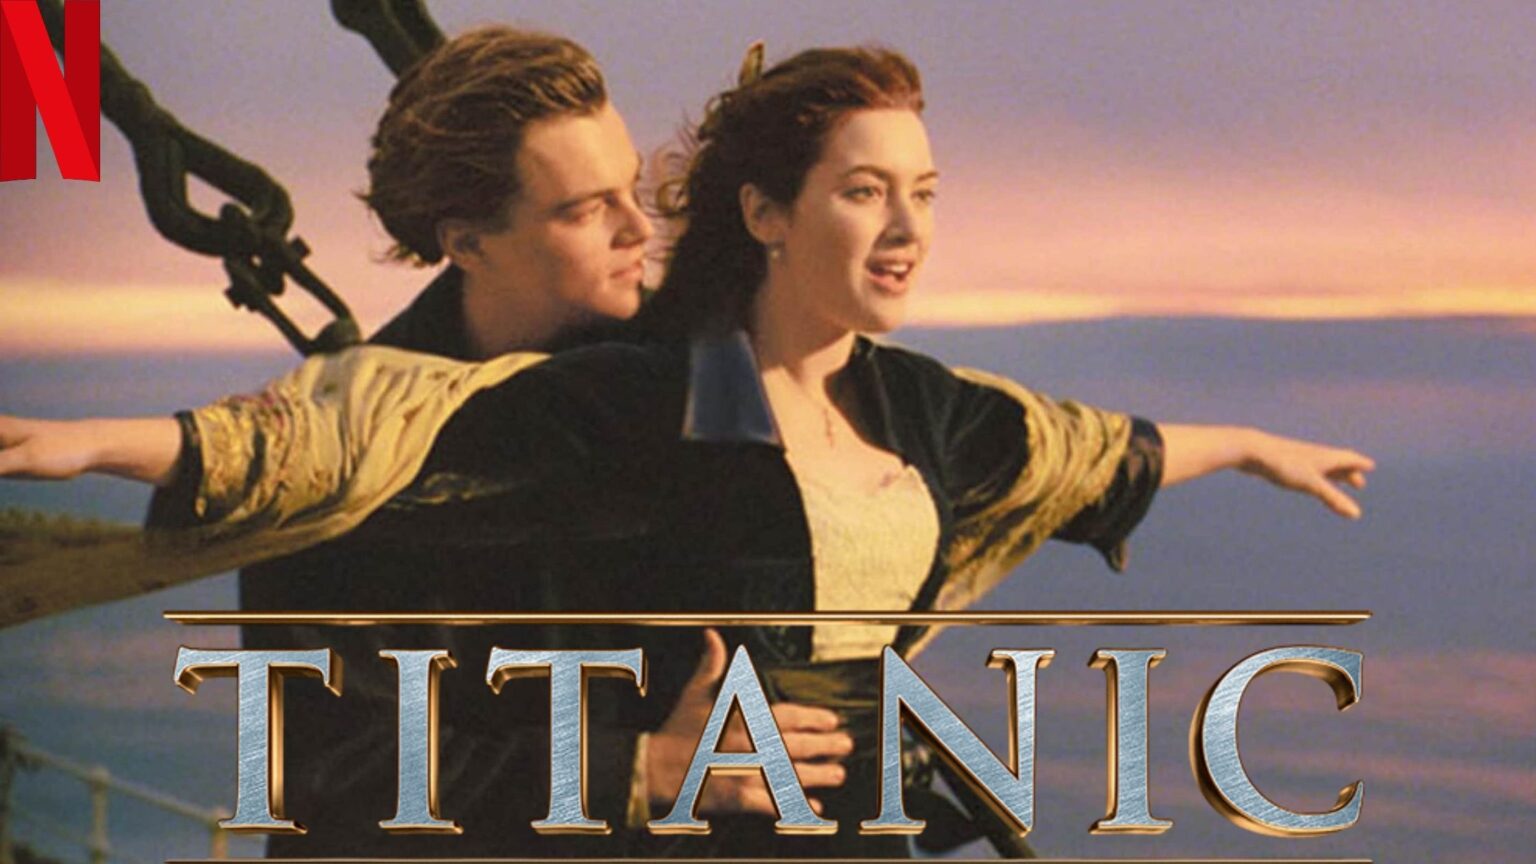 Titanic instal the last version for mac